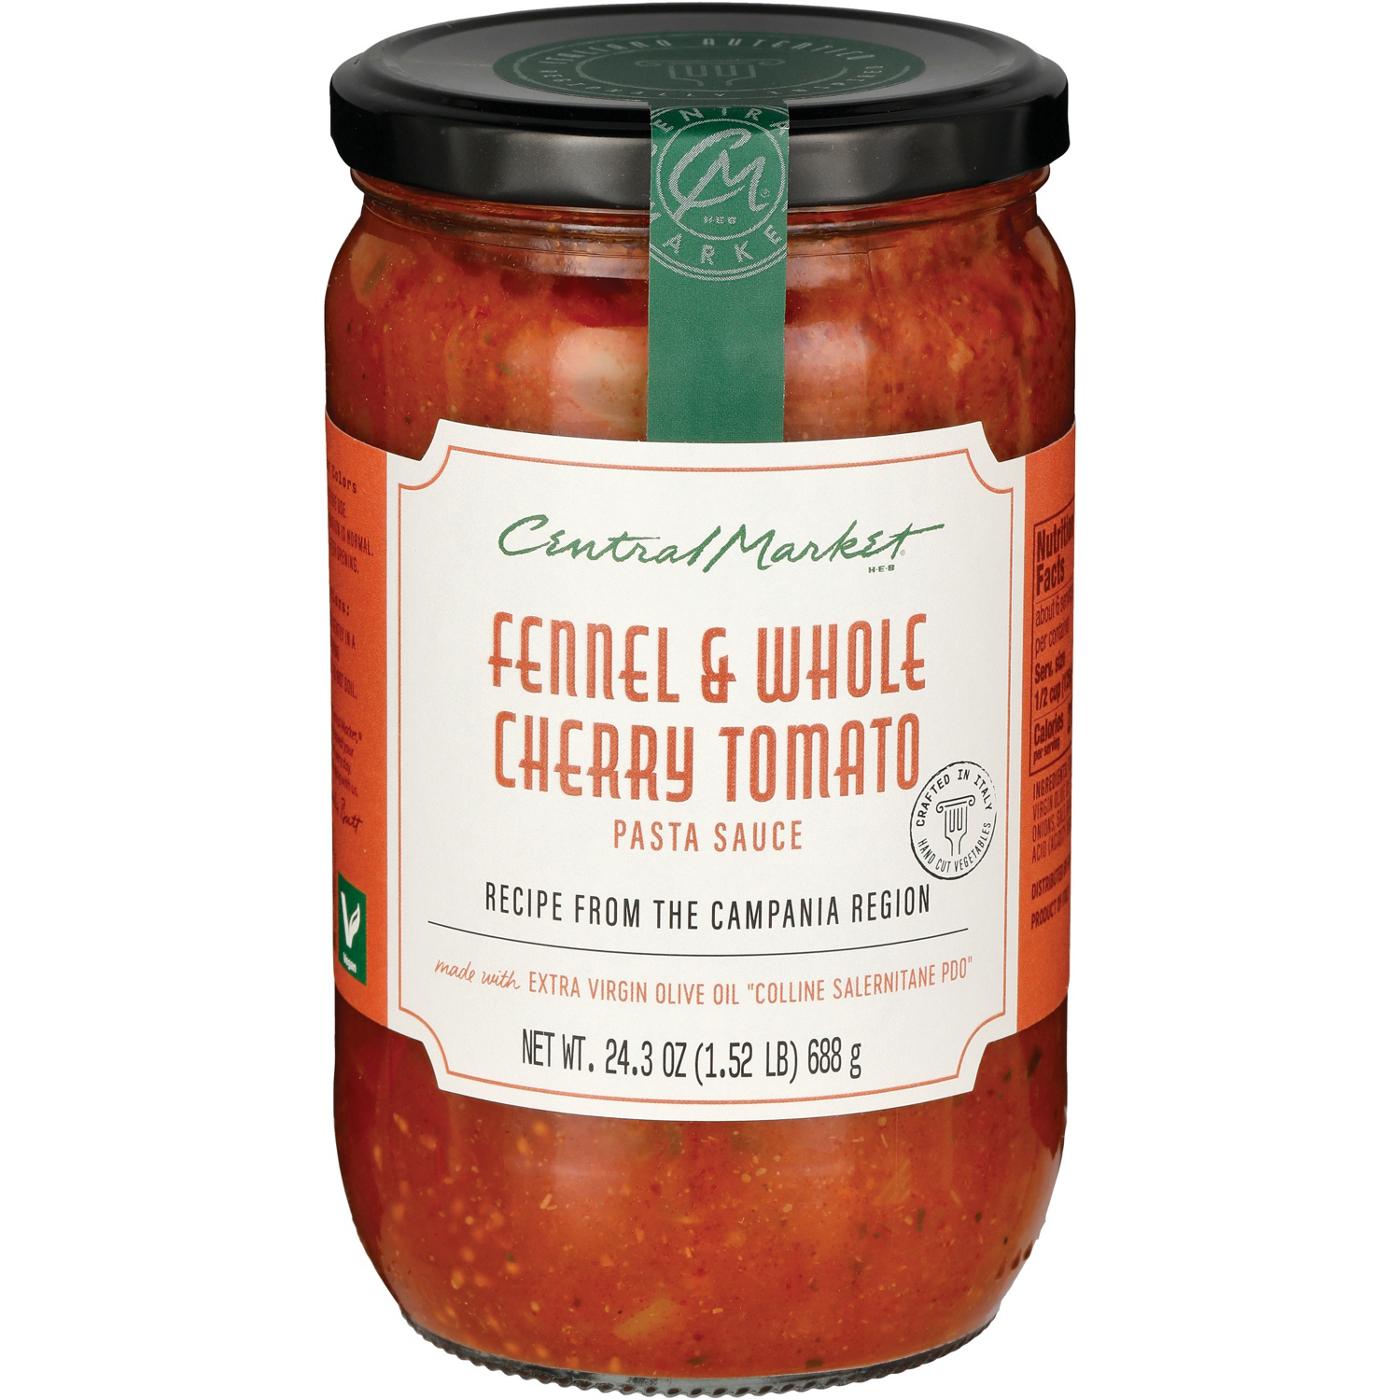 Central Market Campania Fennel & Whole Cherry Tomato Pasta Sauce; image 2 of 2